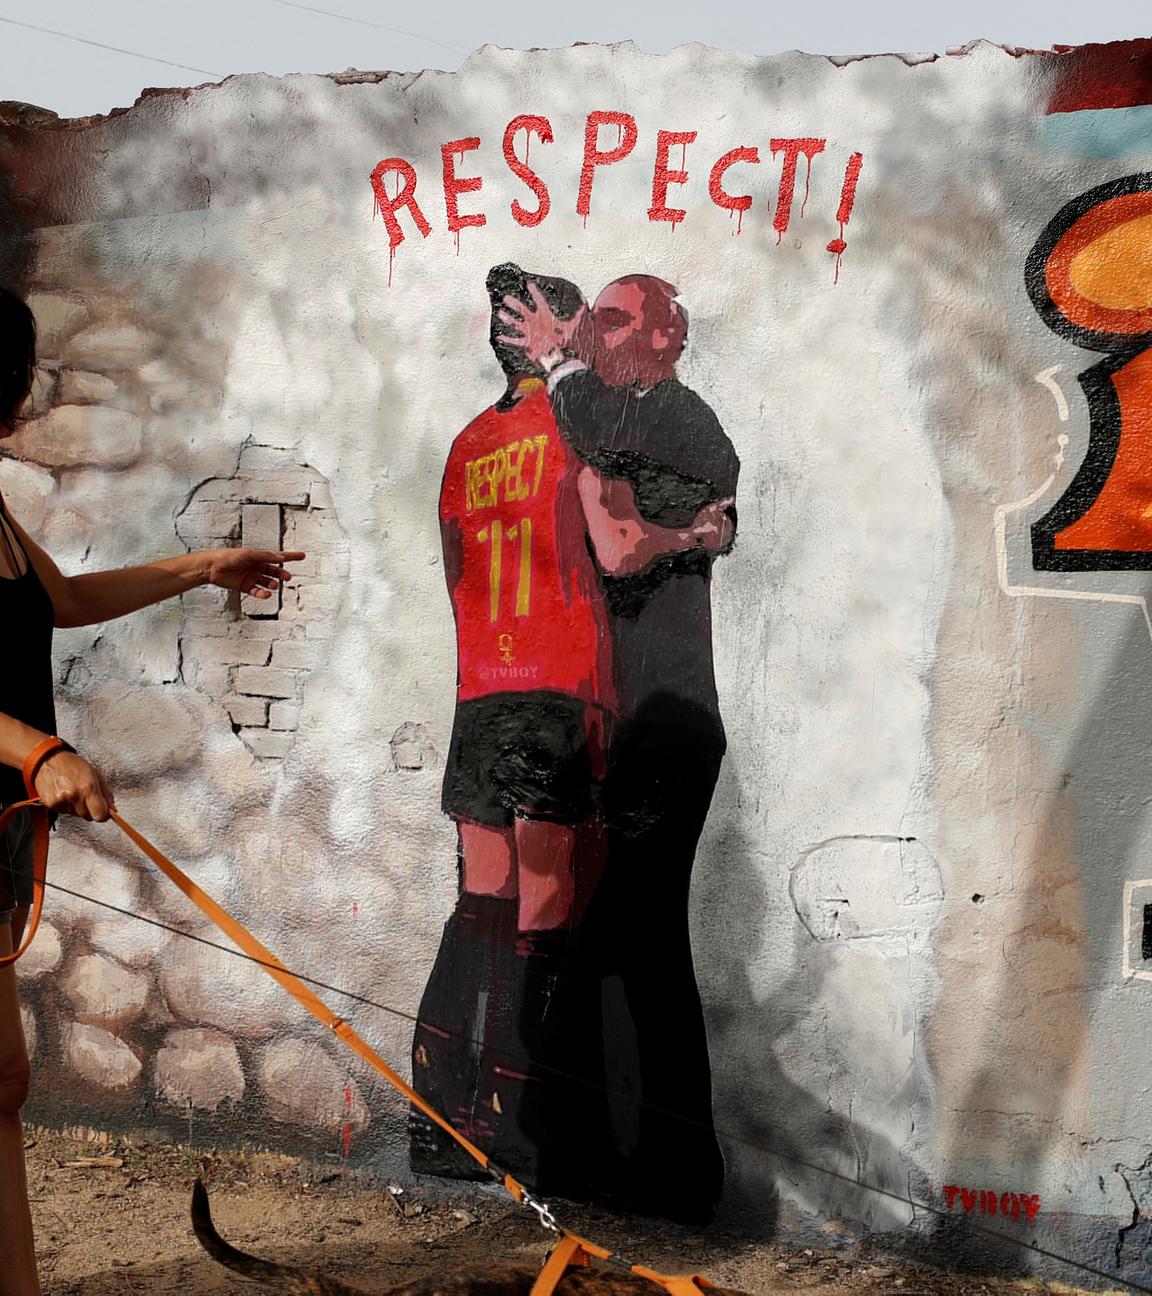 Der Kuss-Skandal als Graffiti in Barcelona